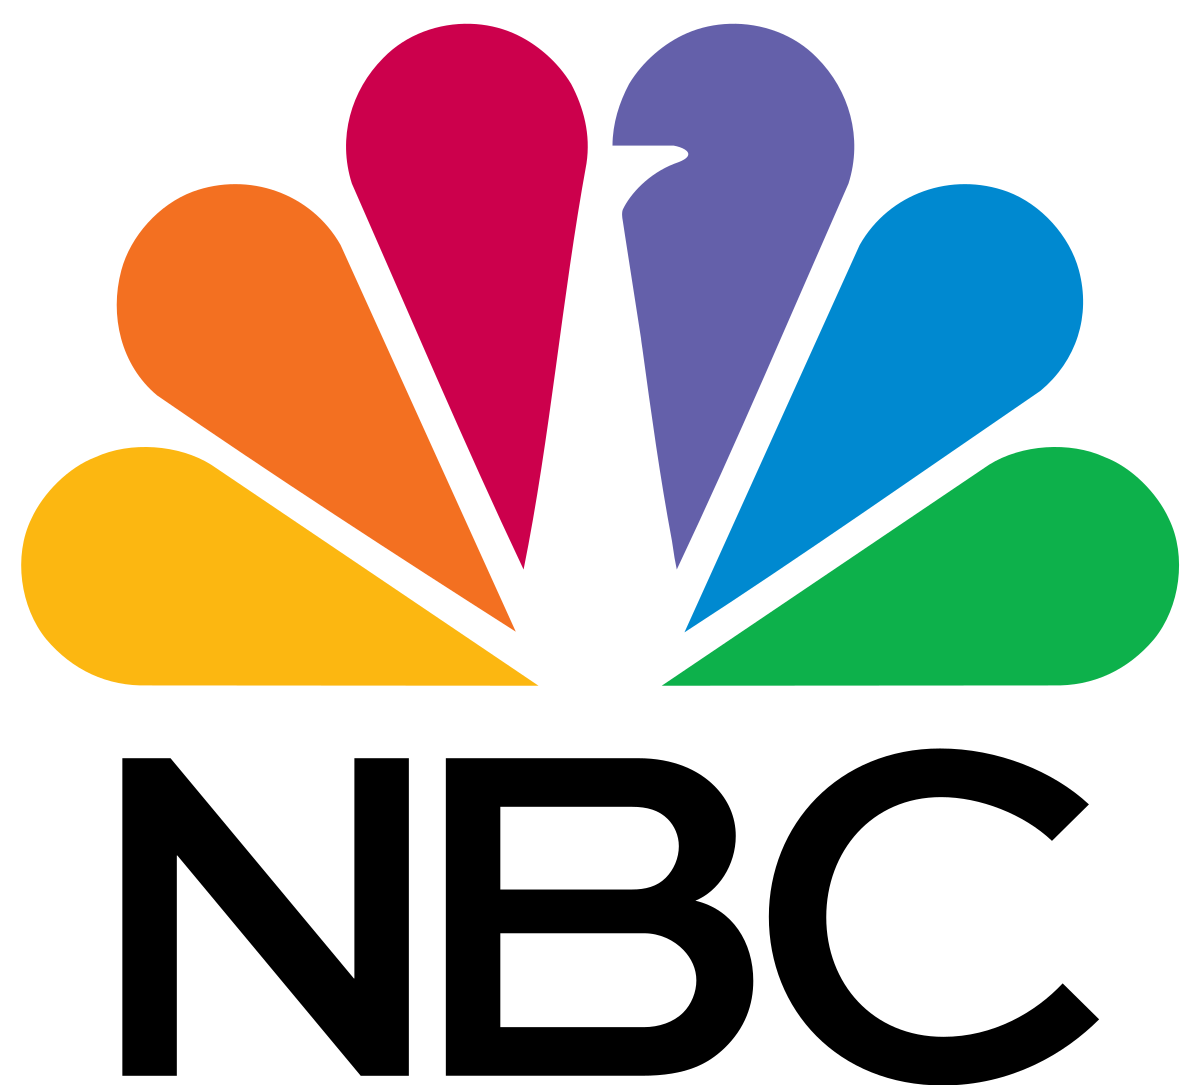 NBC - Wikipedia